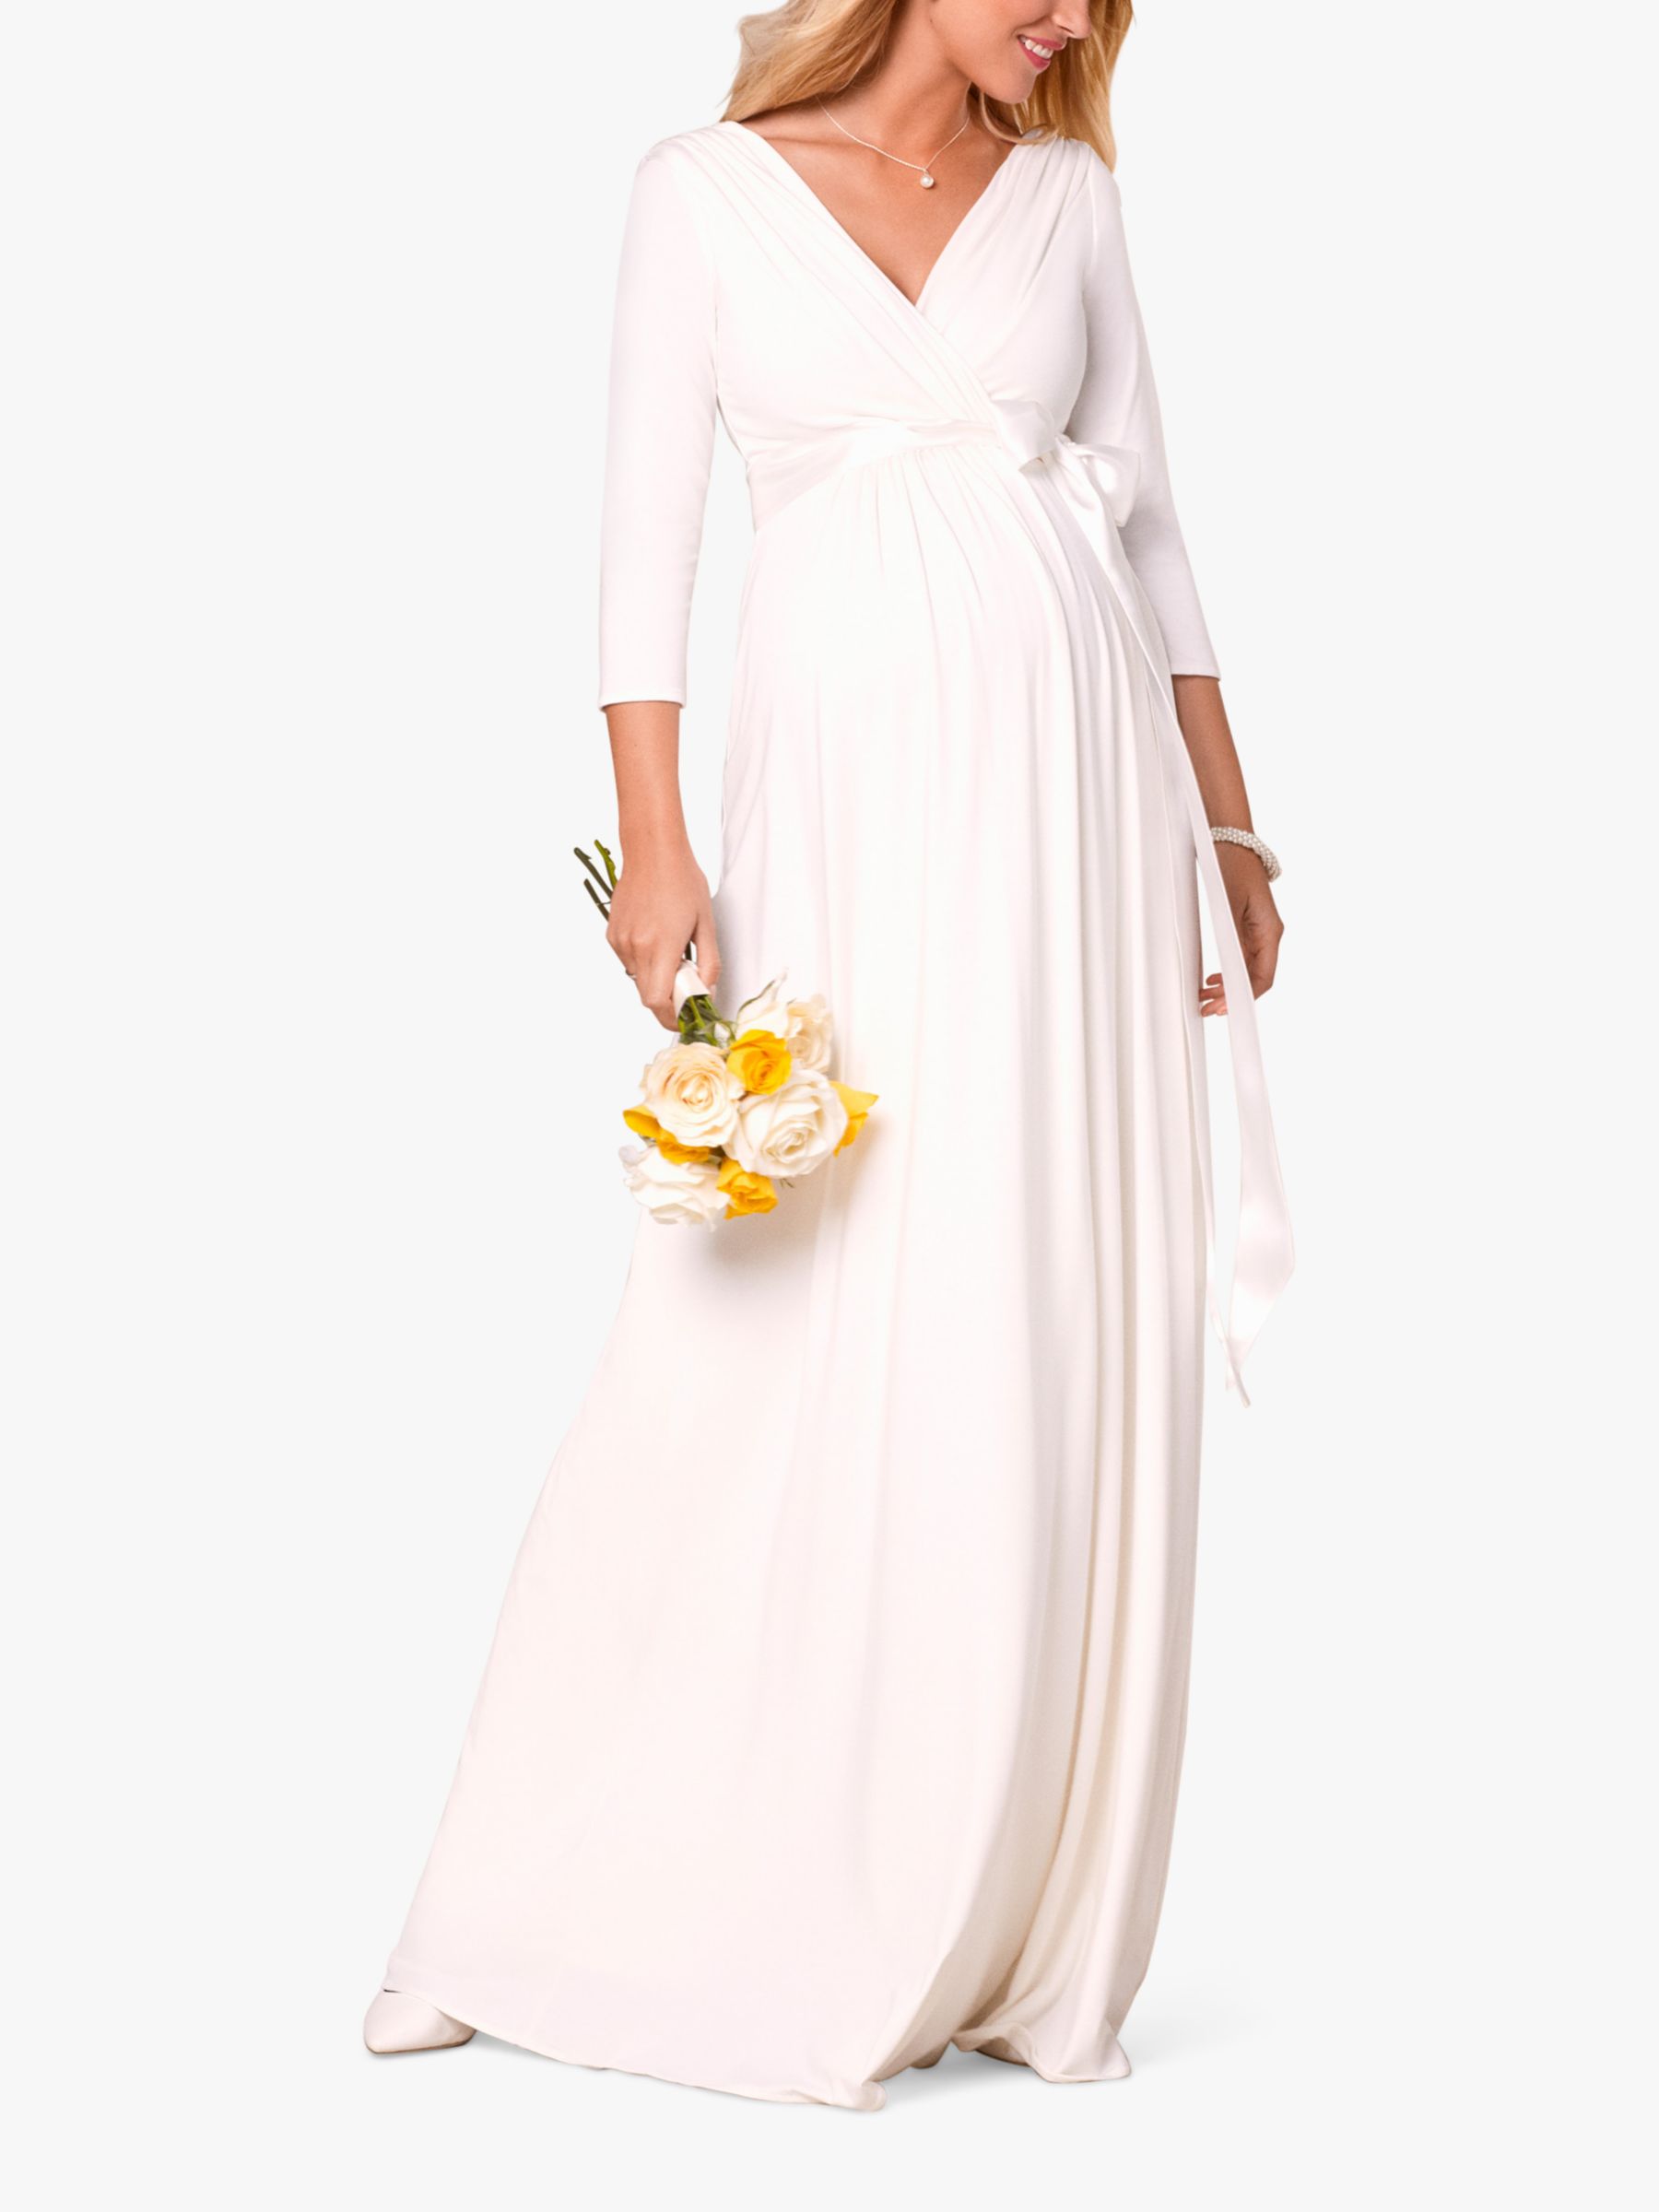 Tiffany Rose Willow Maternity Wedding Dress, Ivory, 6-8